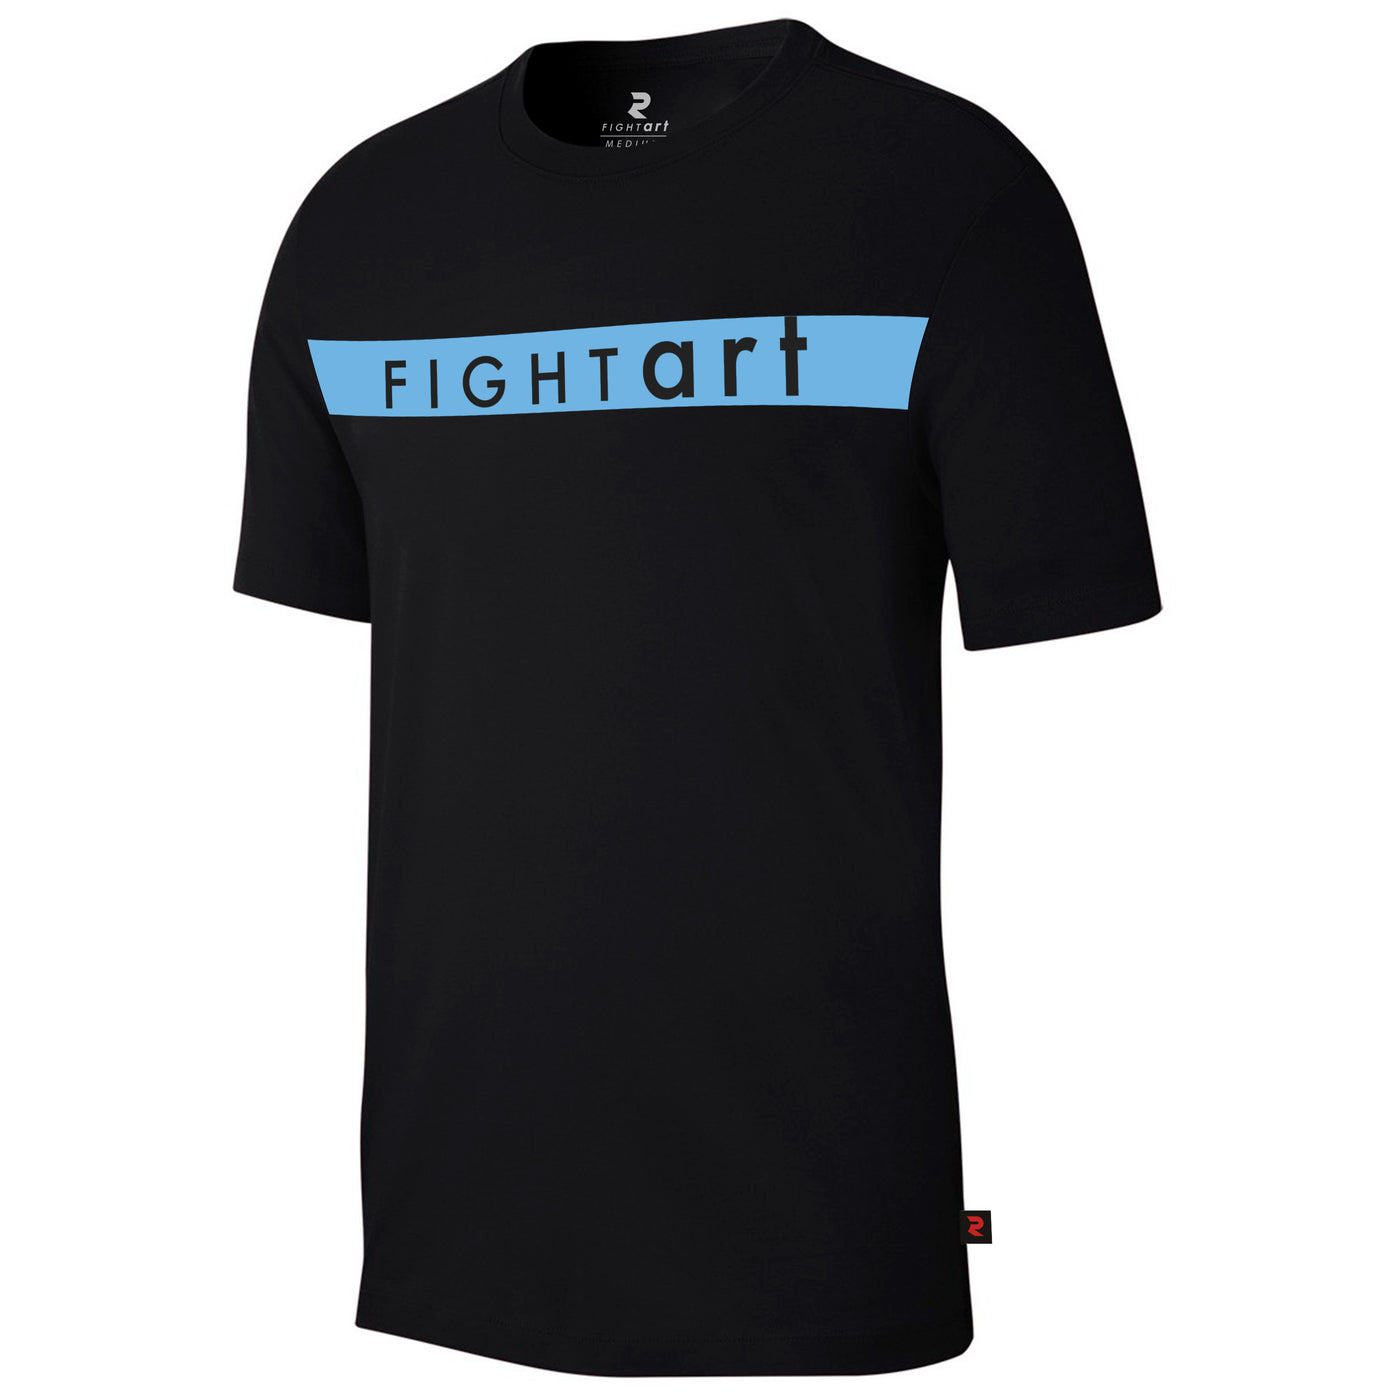 FightArt T-Shirts